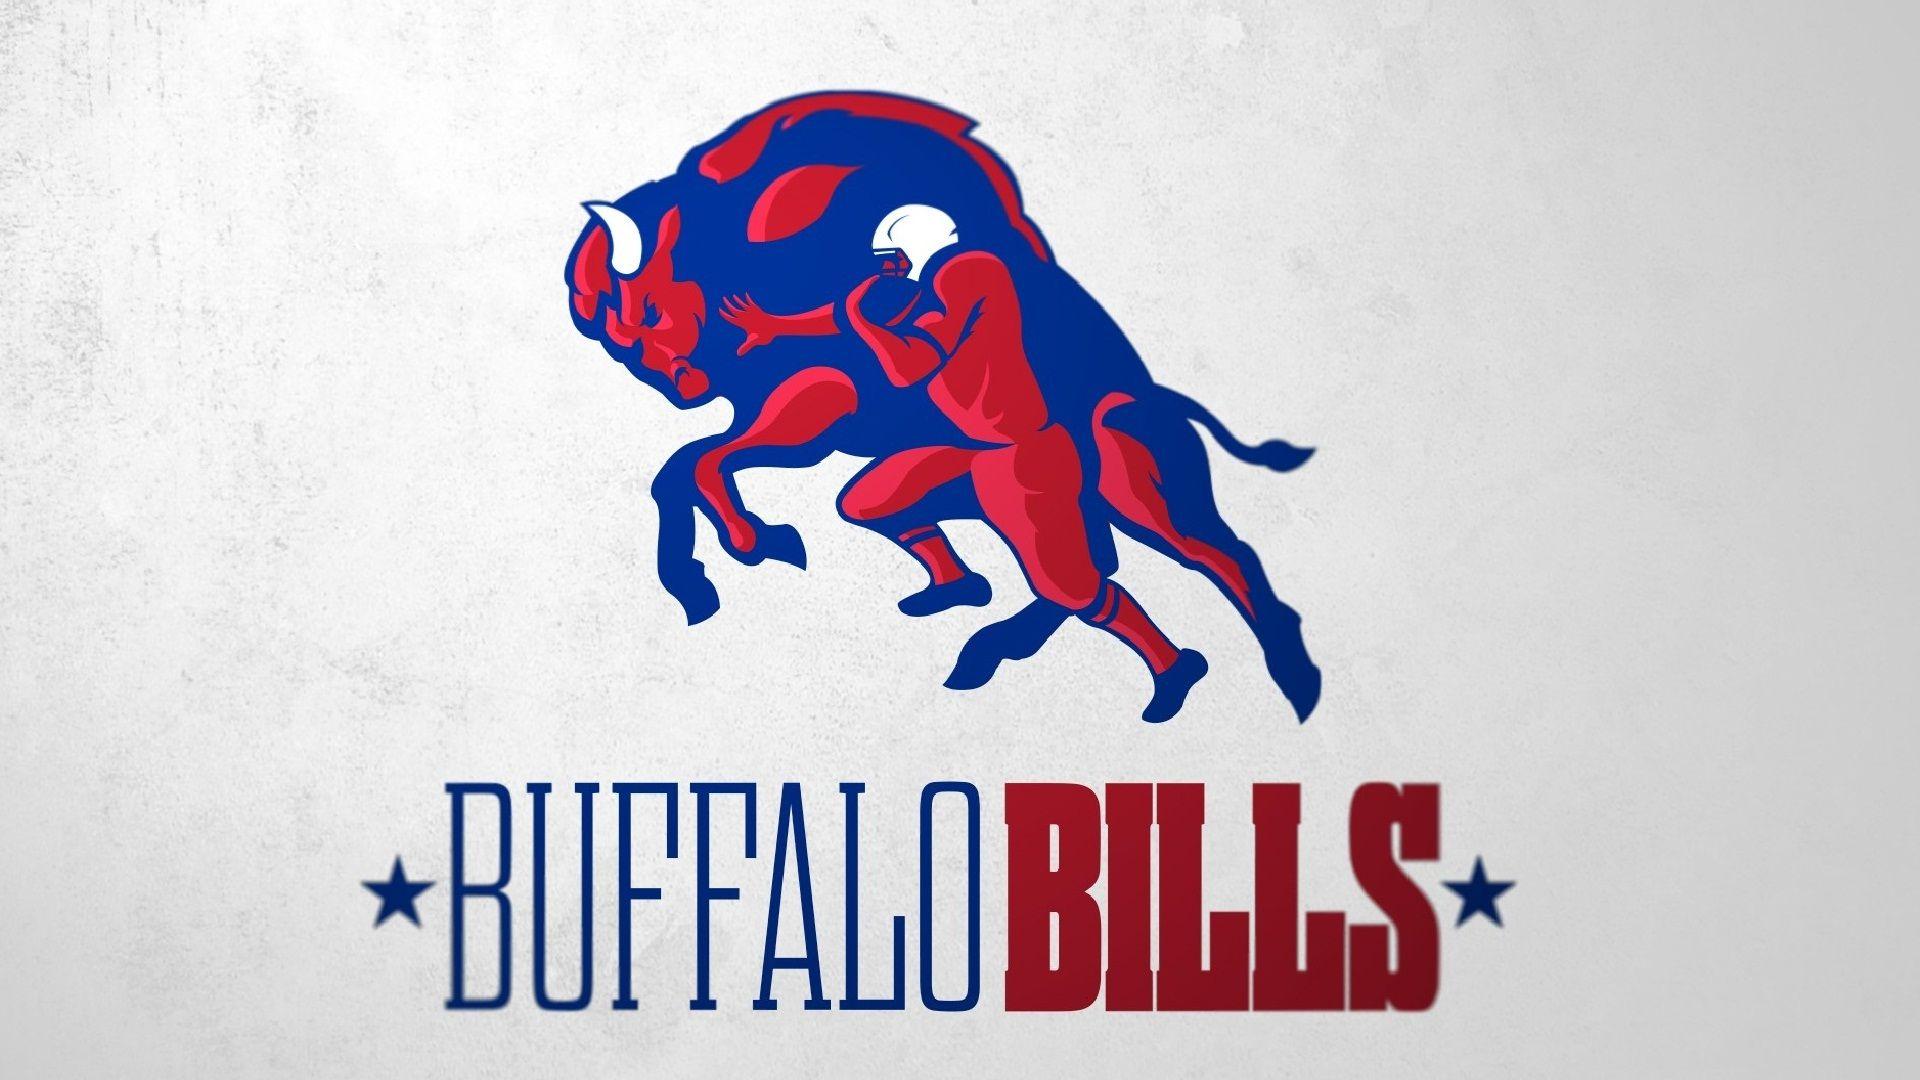 Buffalo Bills For Mac. Buffalo bills, Buffalo and Football